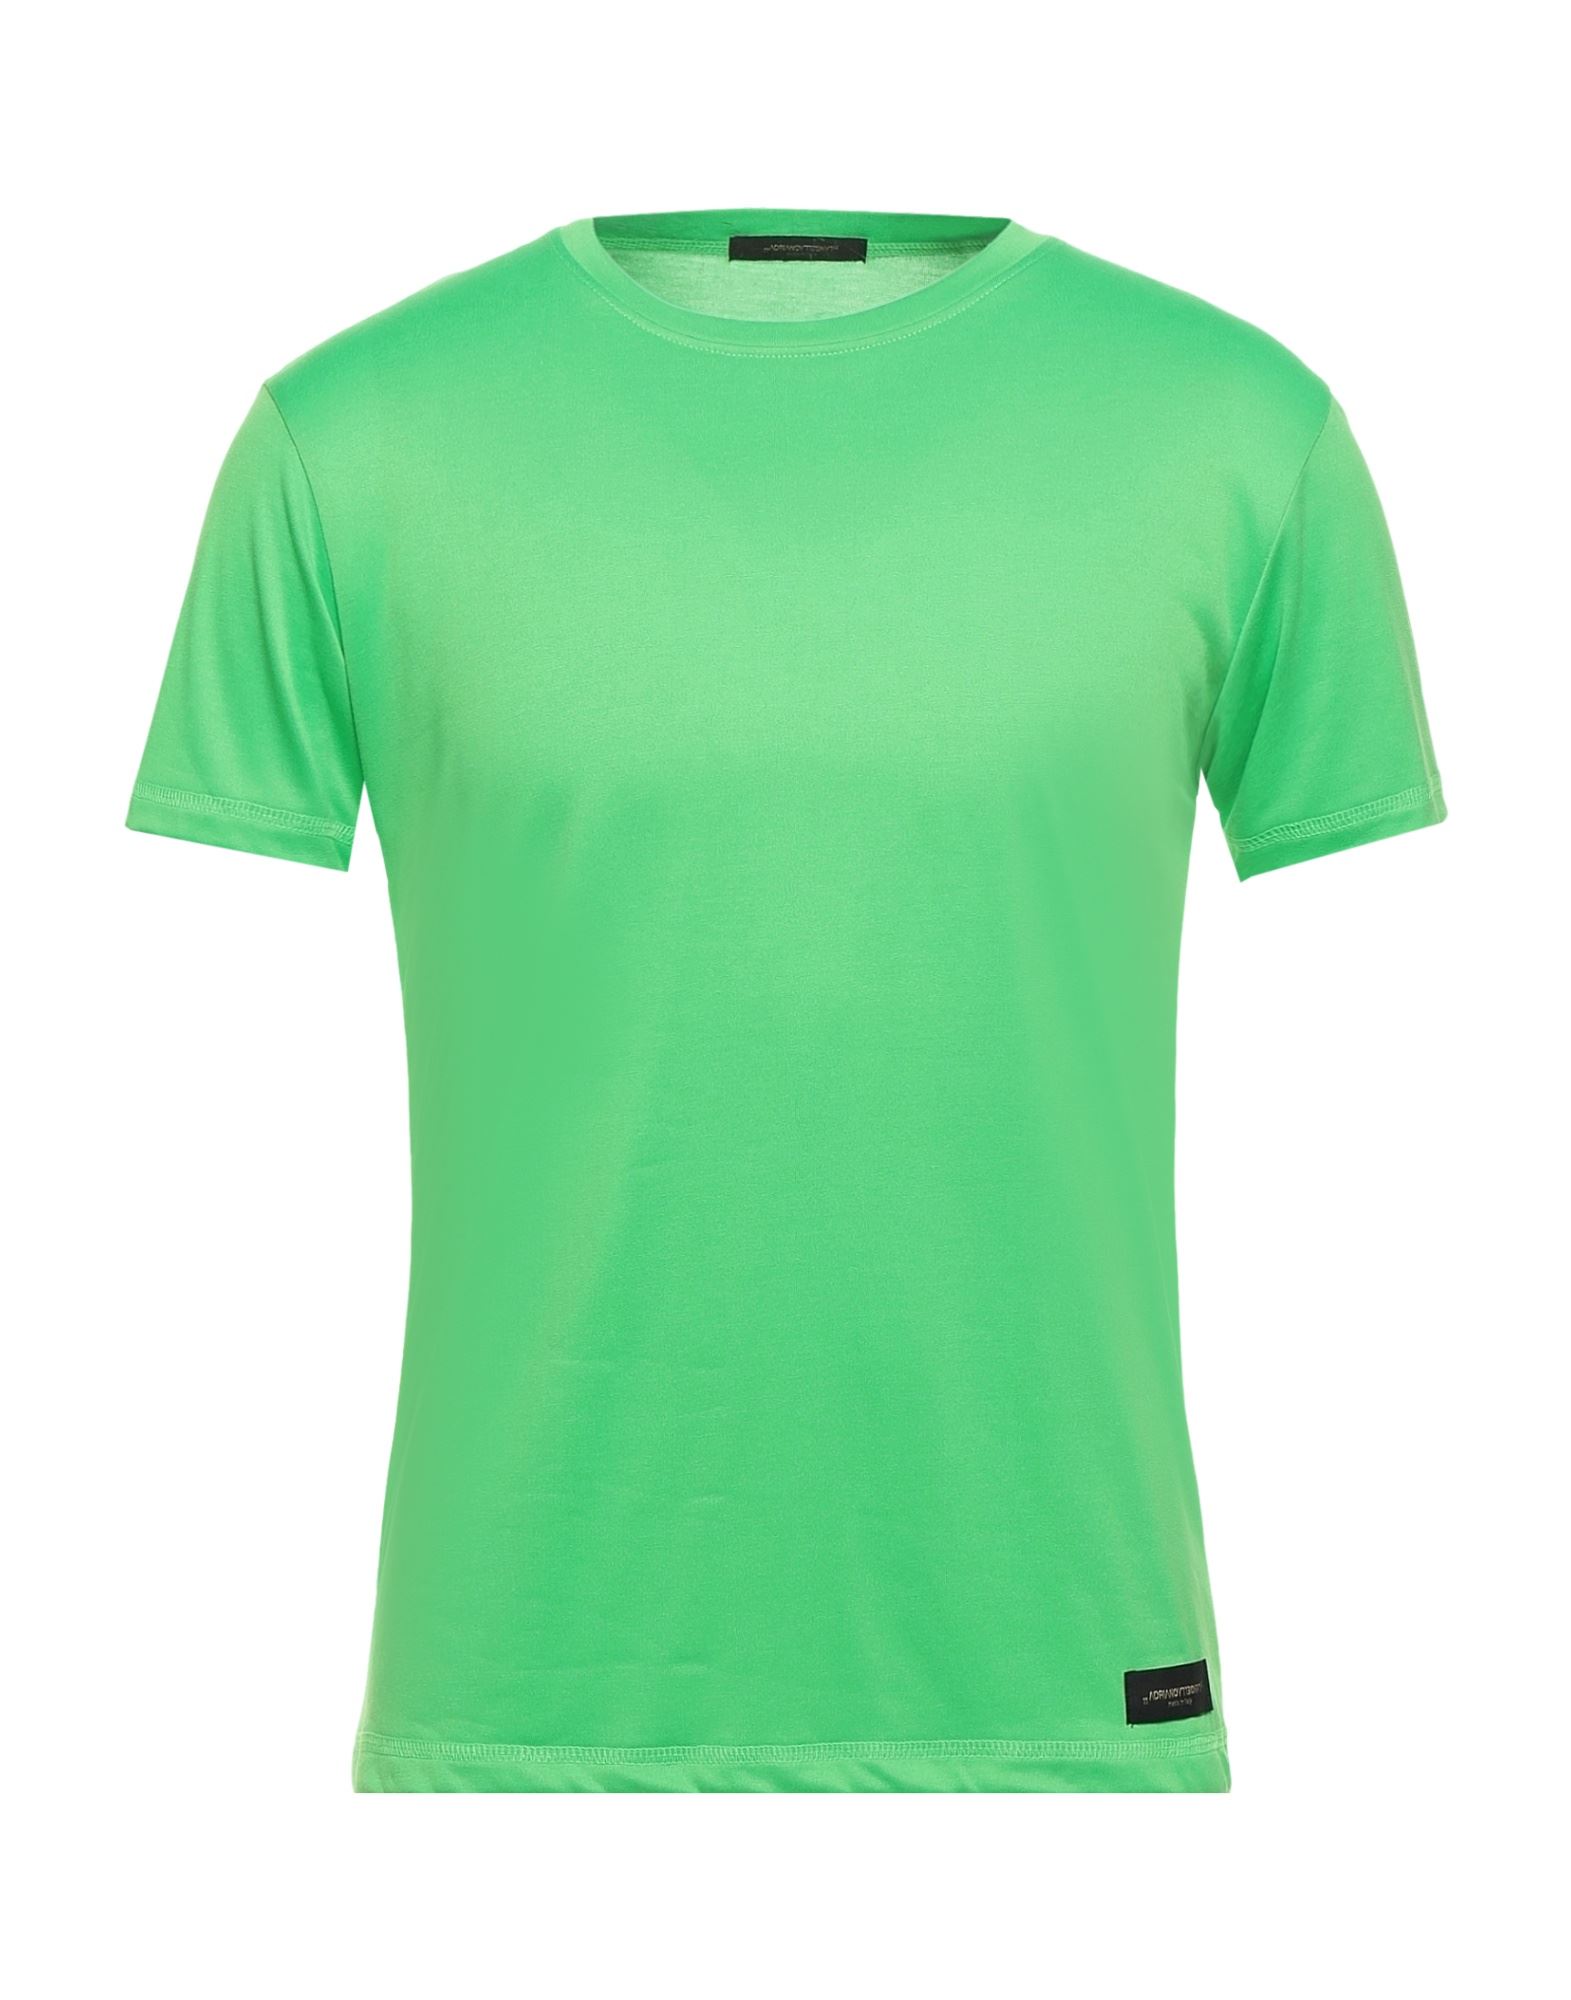 Adriano Langella T-shirts In Green